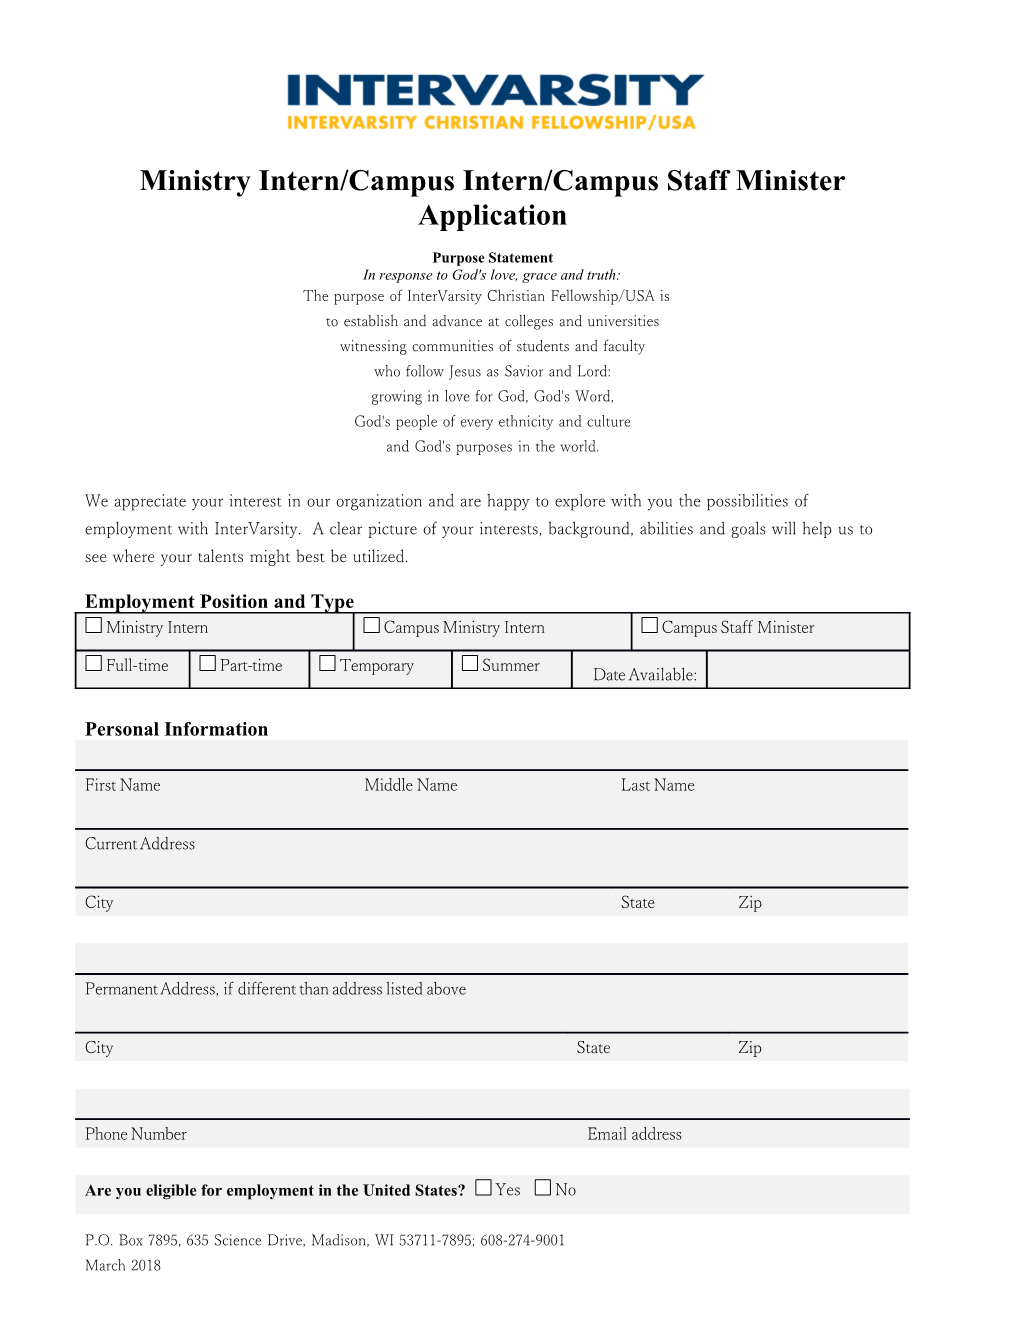 Ministry Intern/Campus Intern/Campus Staff Minister Application